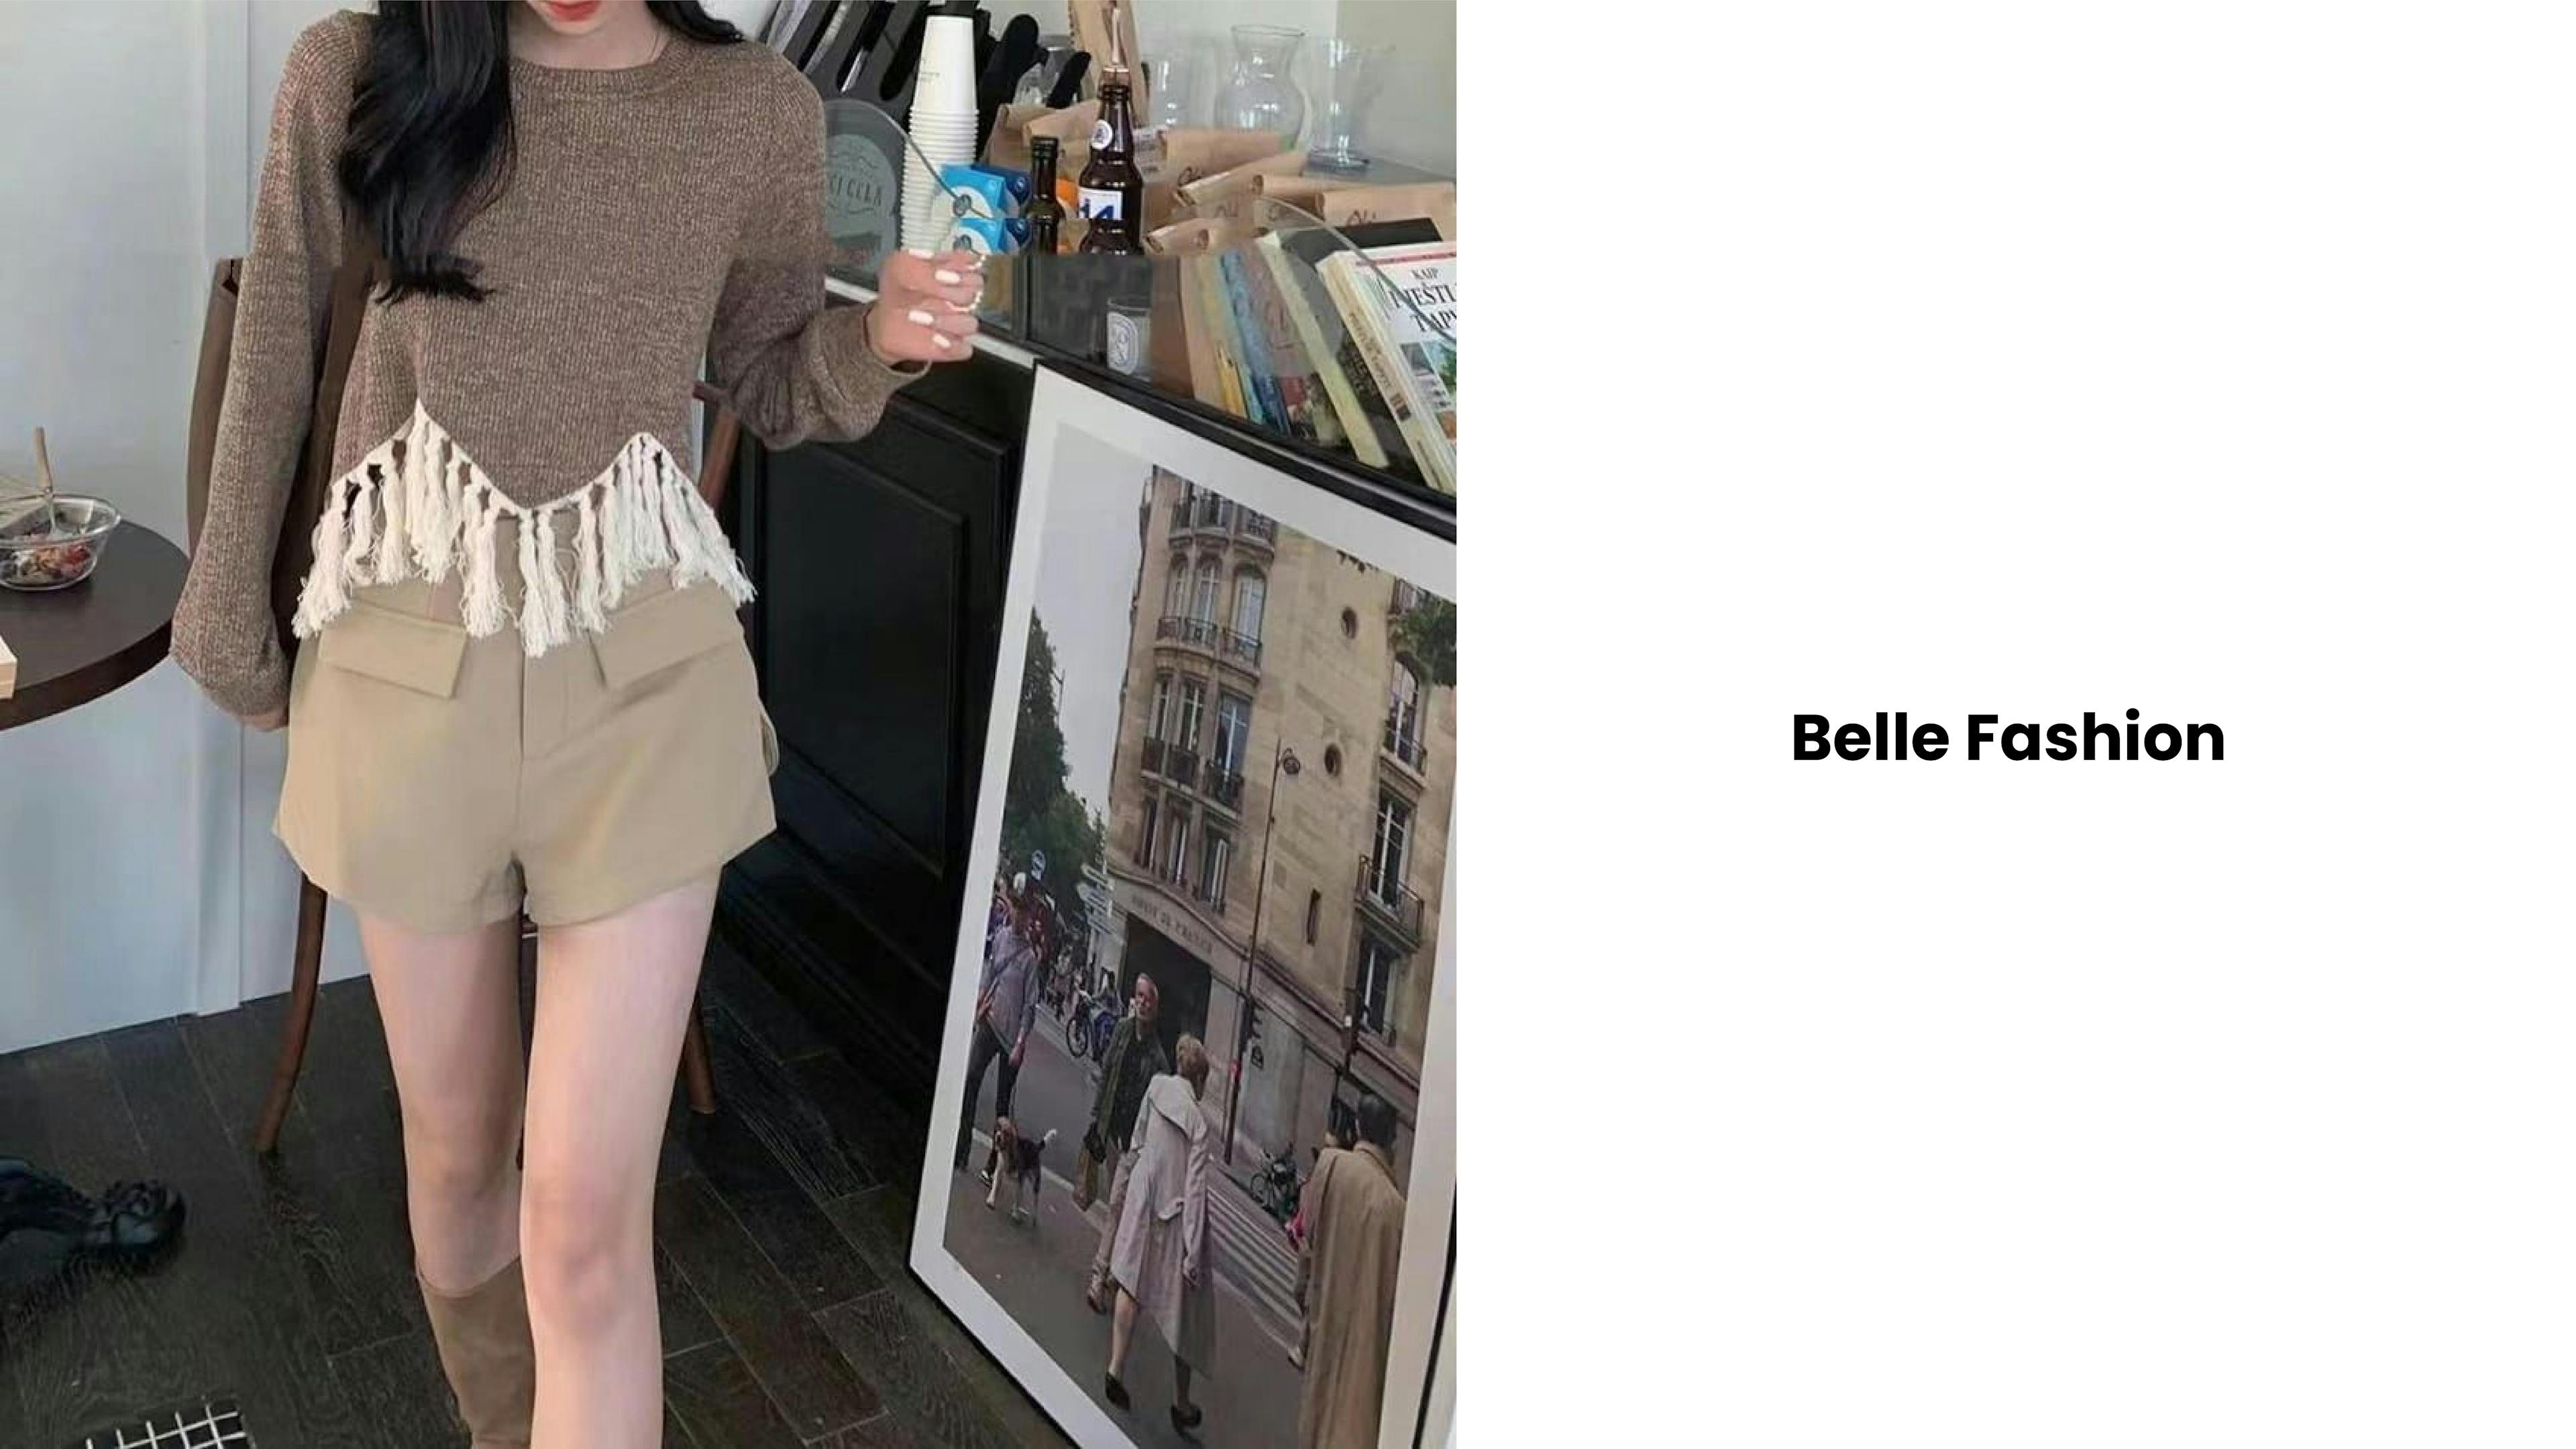 Belle Fashion